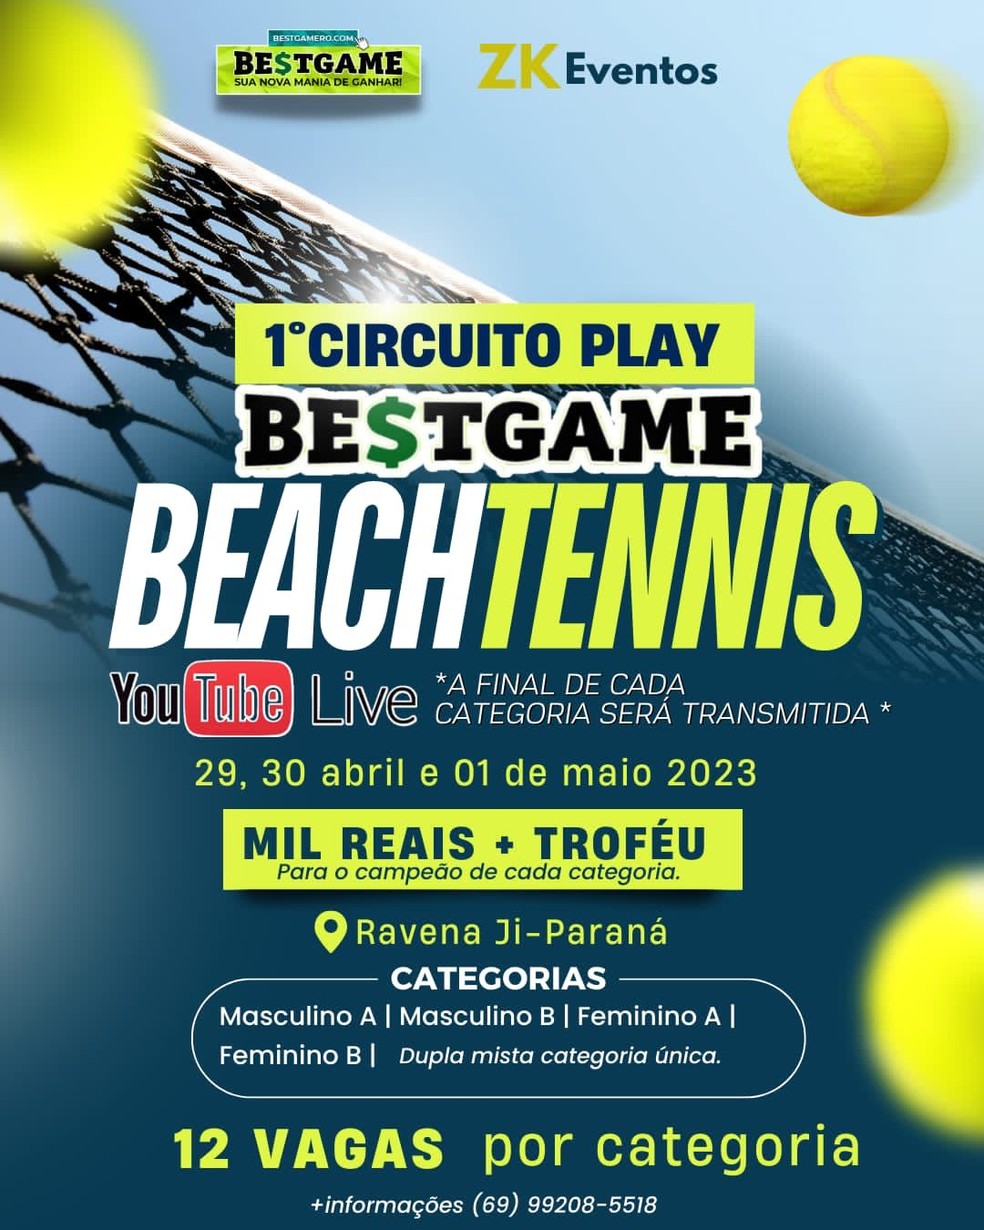 Copa do Mundo de Beach Tennis 2023 - Brasil x Argentina - AO VIVO